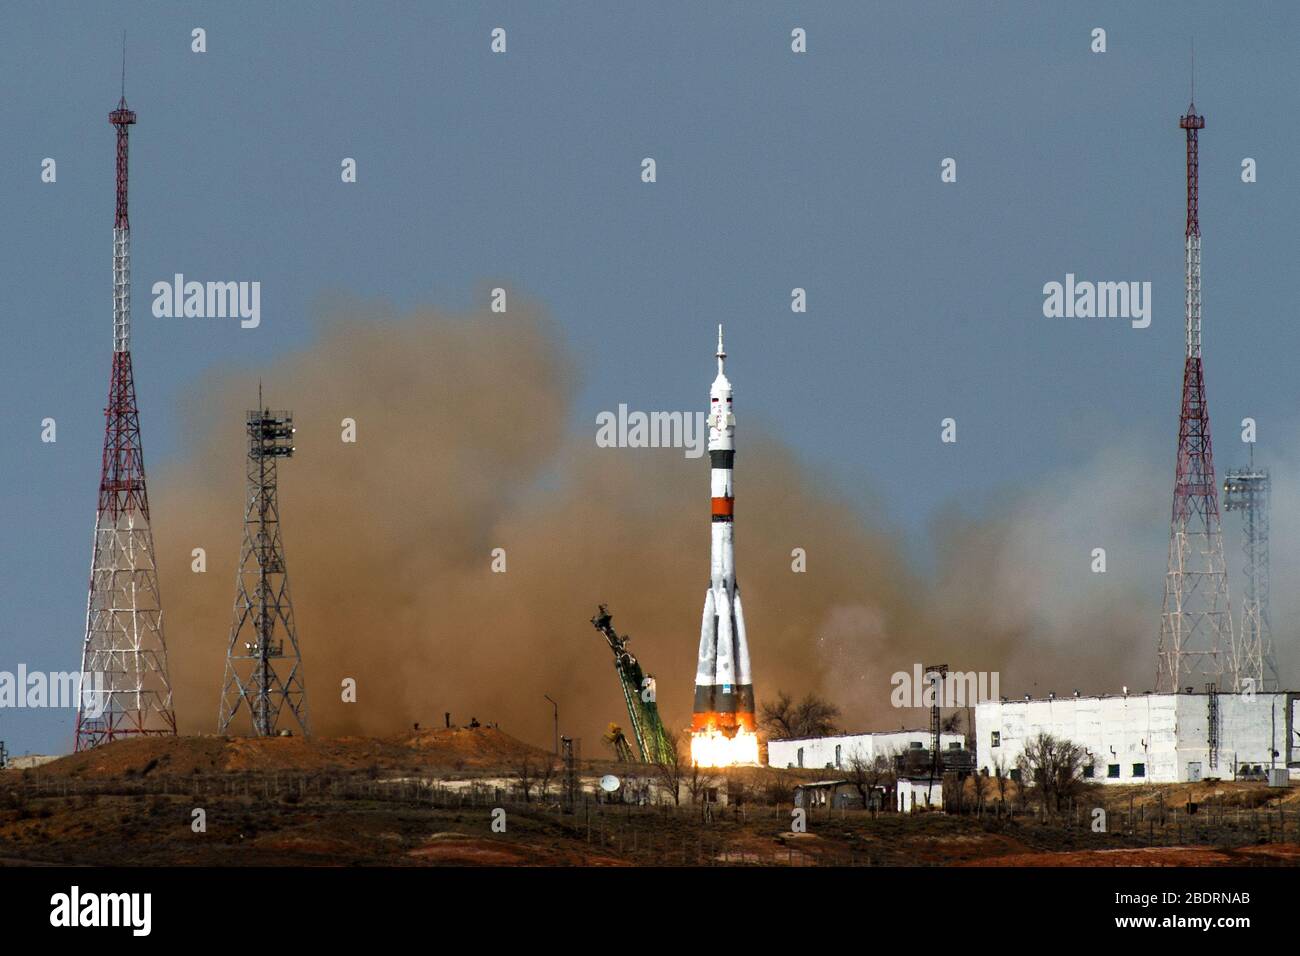 BAIKONUR, KAZAKHSTAN - 09 April 2020 - The Soyuz MS-16 lifts off from Site 31 at the Baikonur Cosmodrome in Kazakhstan Thursday, April 9, 2020 sending Stock Photo